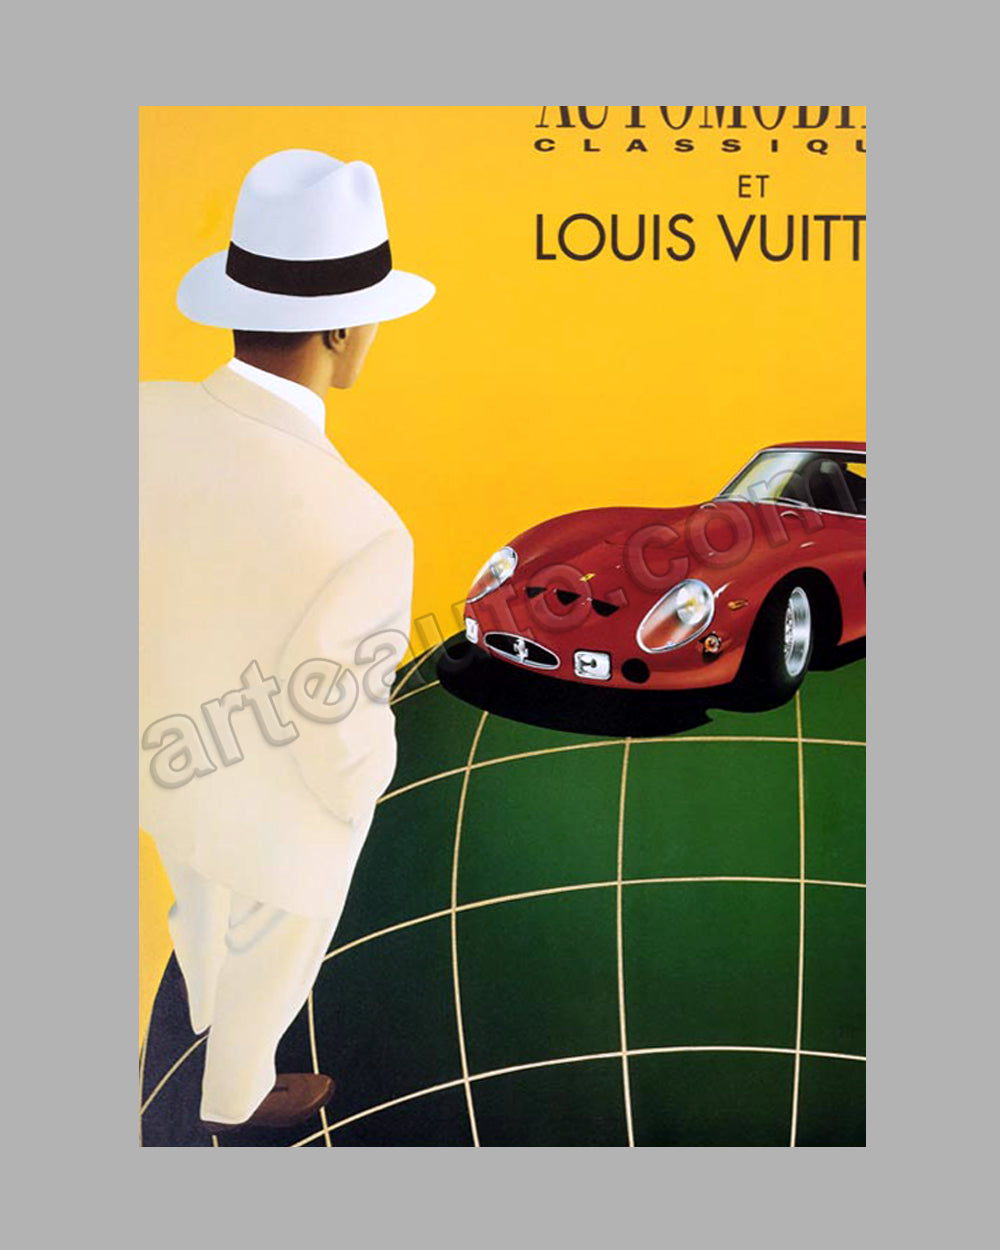 Turnip Designs Designer Handbag Patent Print Fashion Wall Art Gifts for Her Dorm Decor Louis Vuitton Poster Purse Design Tdp1120